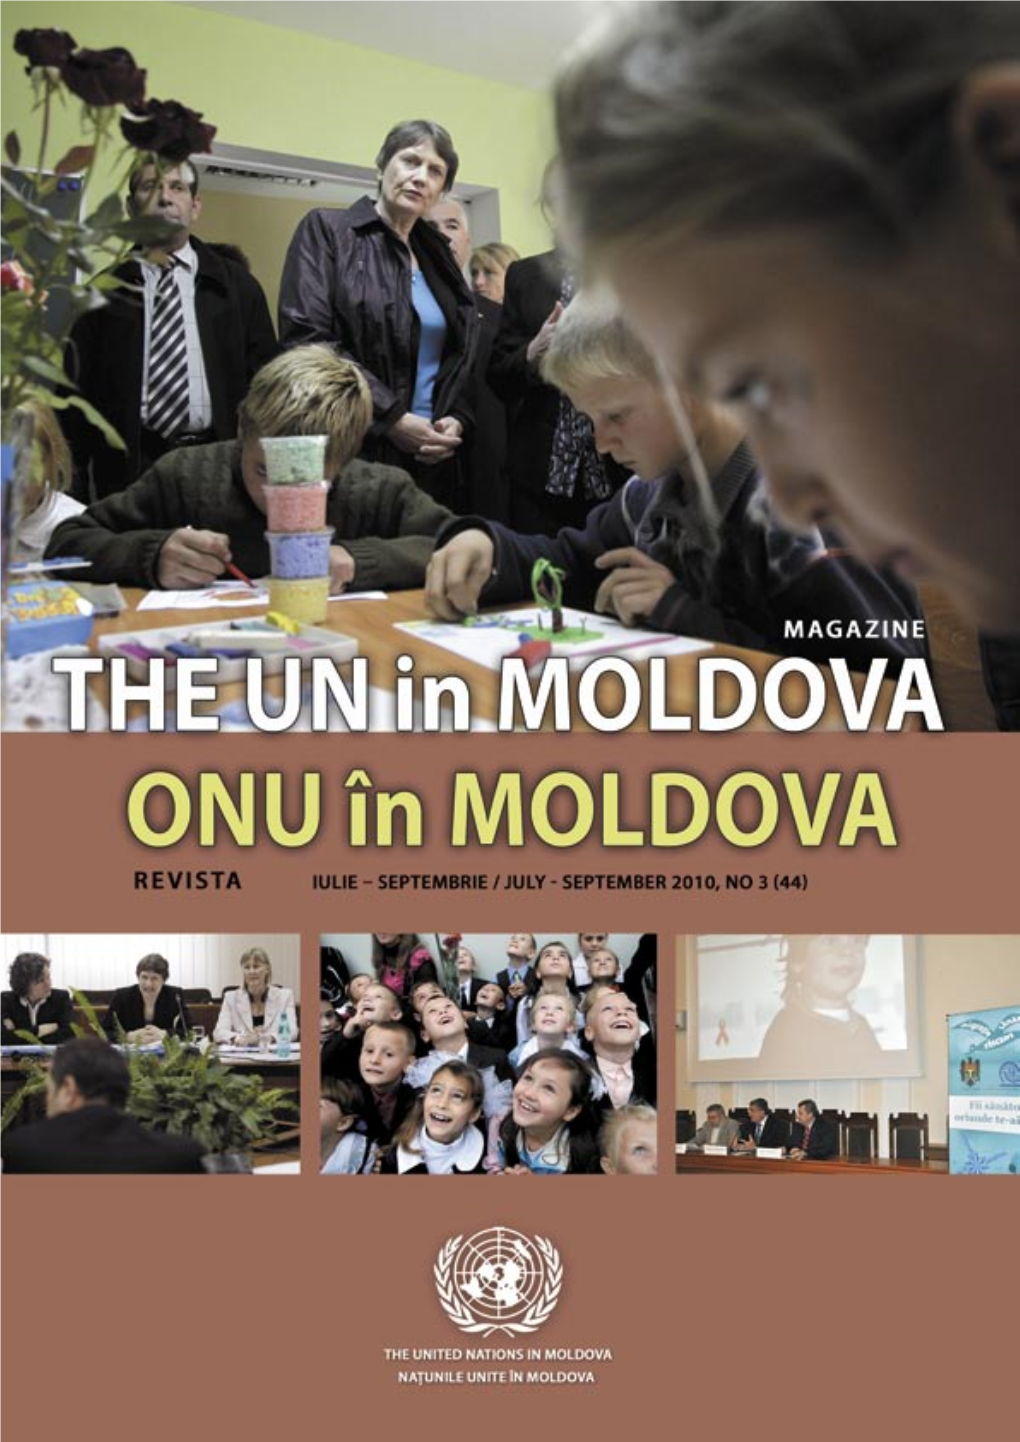 UNDP in Moldova